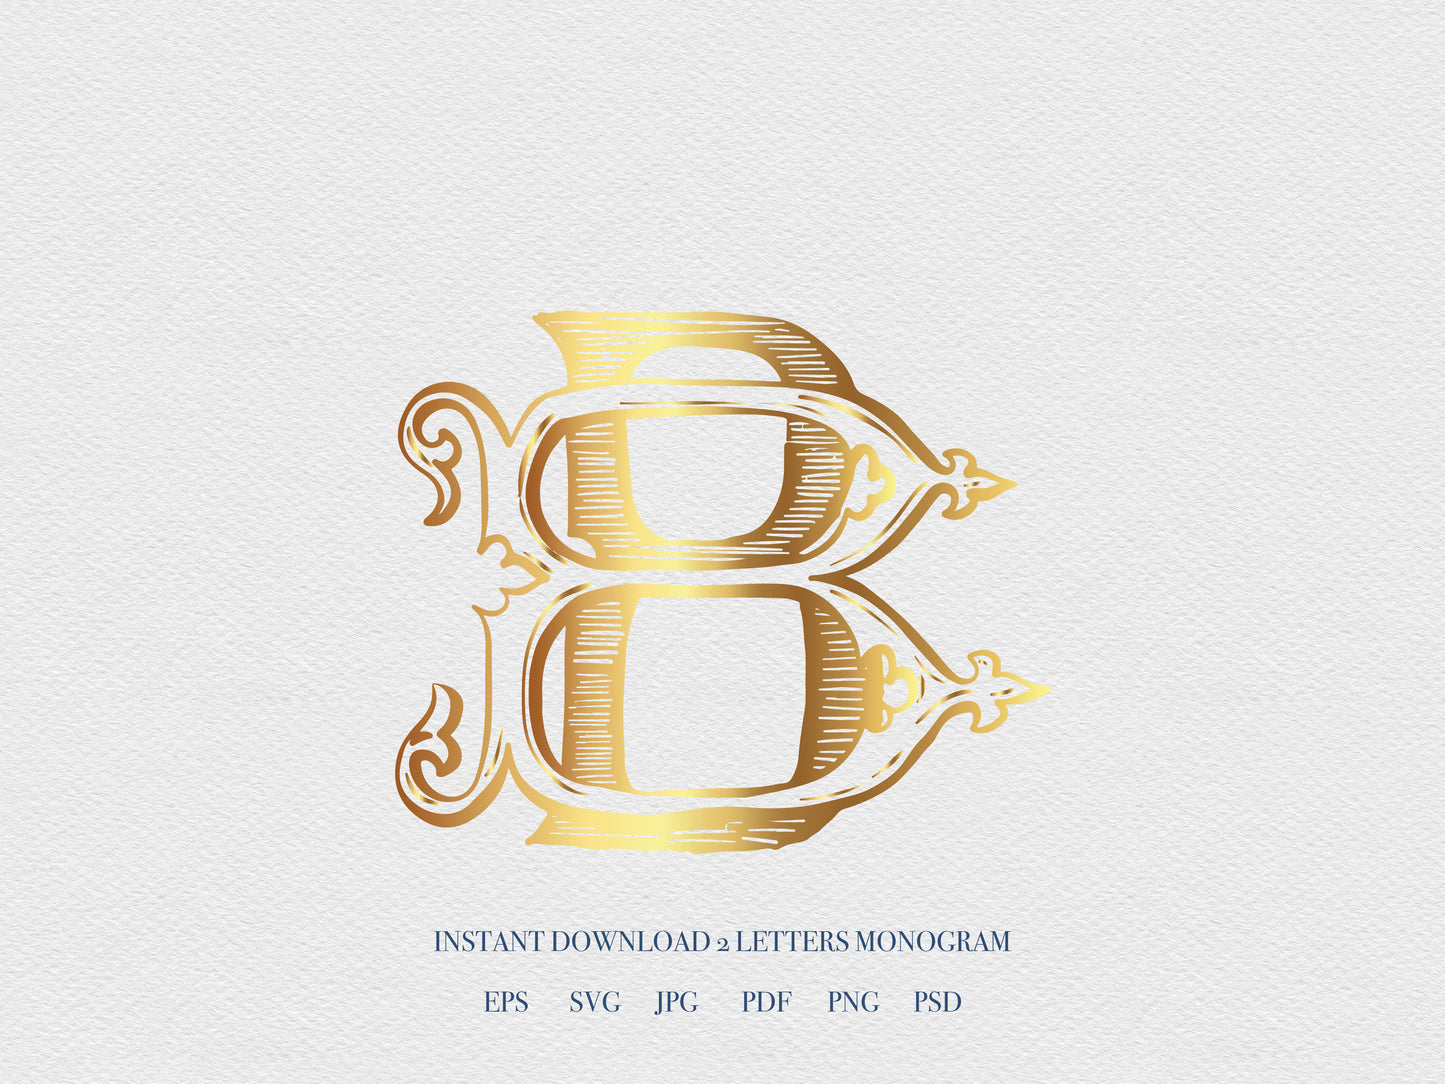 2 Letter Monogram with Letters BB | Digital Download - Wedding Monogram SVG, Personal Logo, Wedding Logo for Wedding Invitations